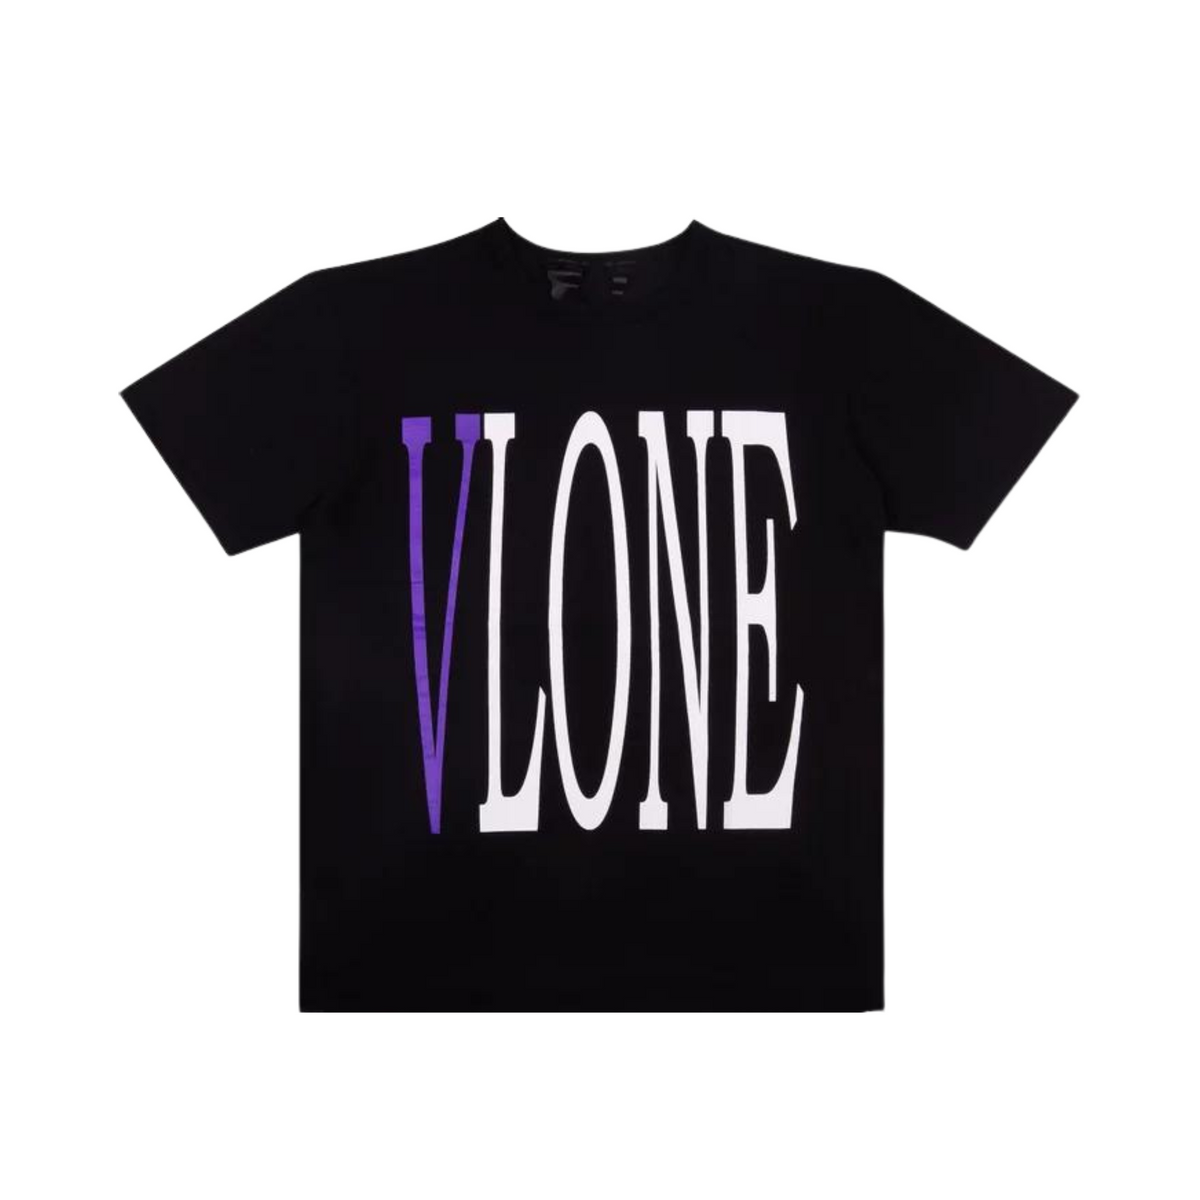 Vlone Staple T-shirt "Black/Purple"